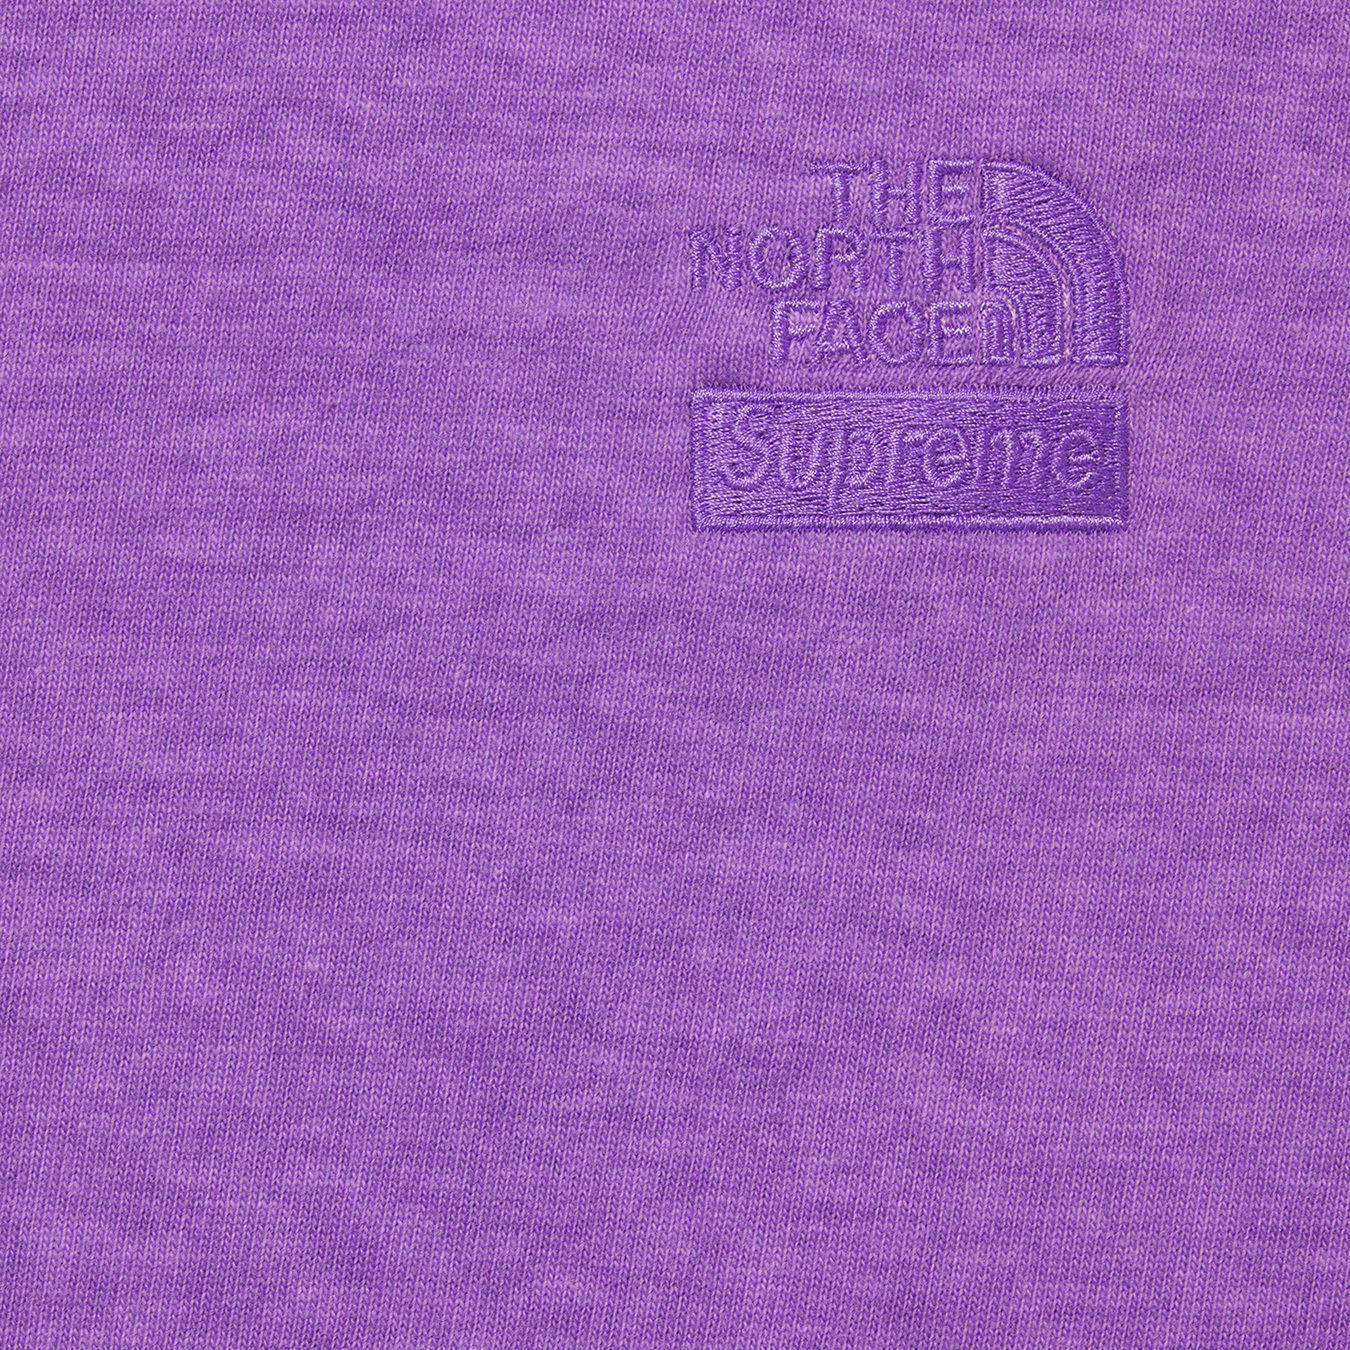 Supreme®/The North Face® Pigment Printed L/S Top